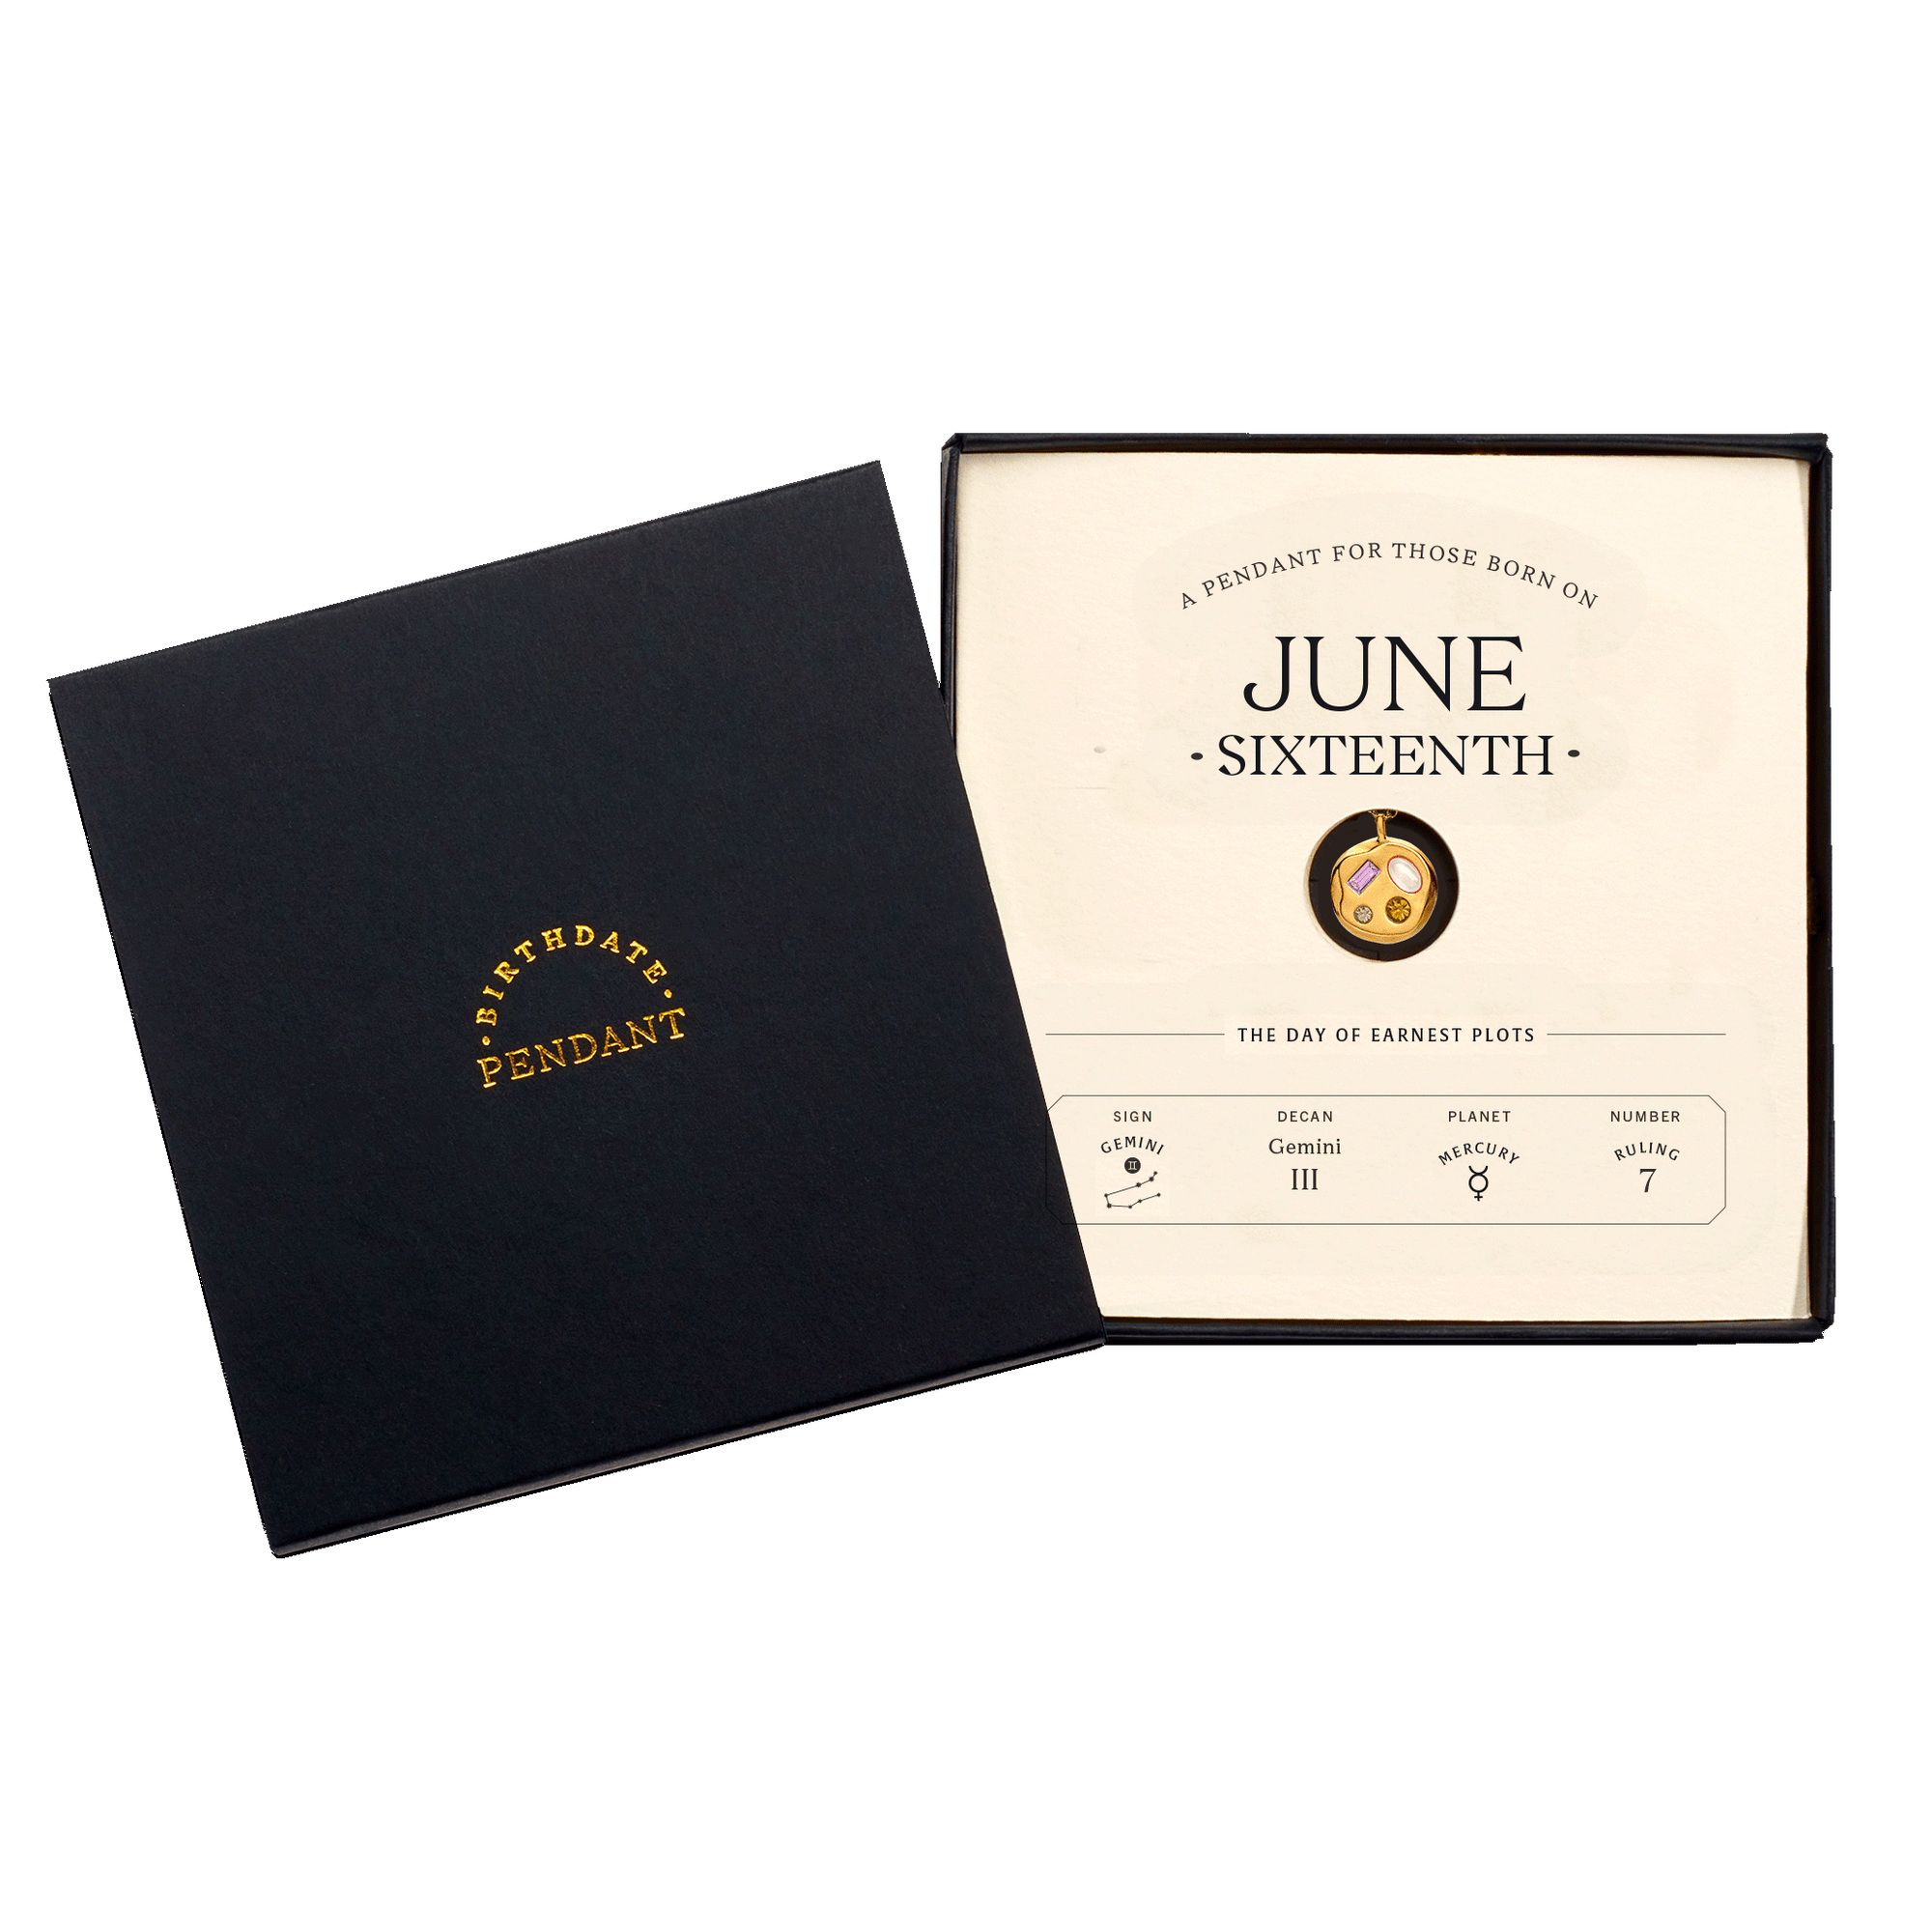 The June Sixteenth Pendant inside its box